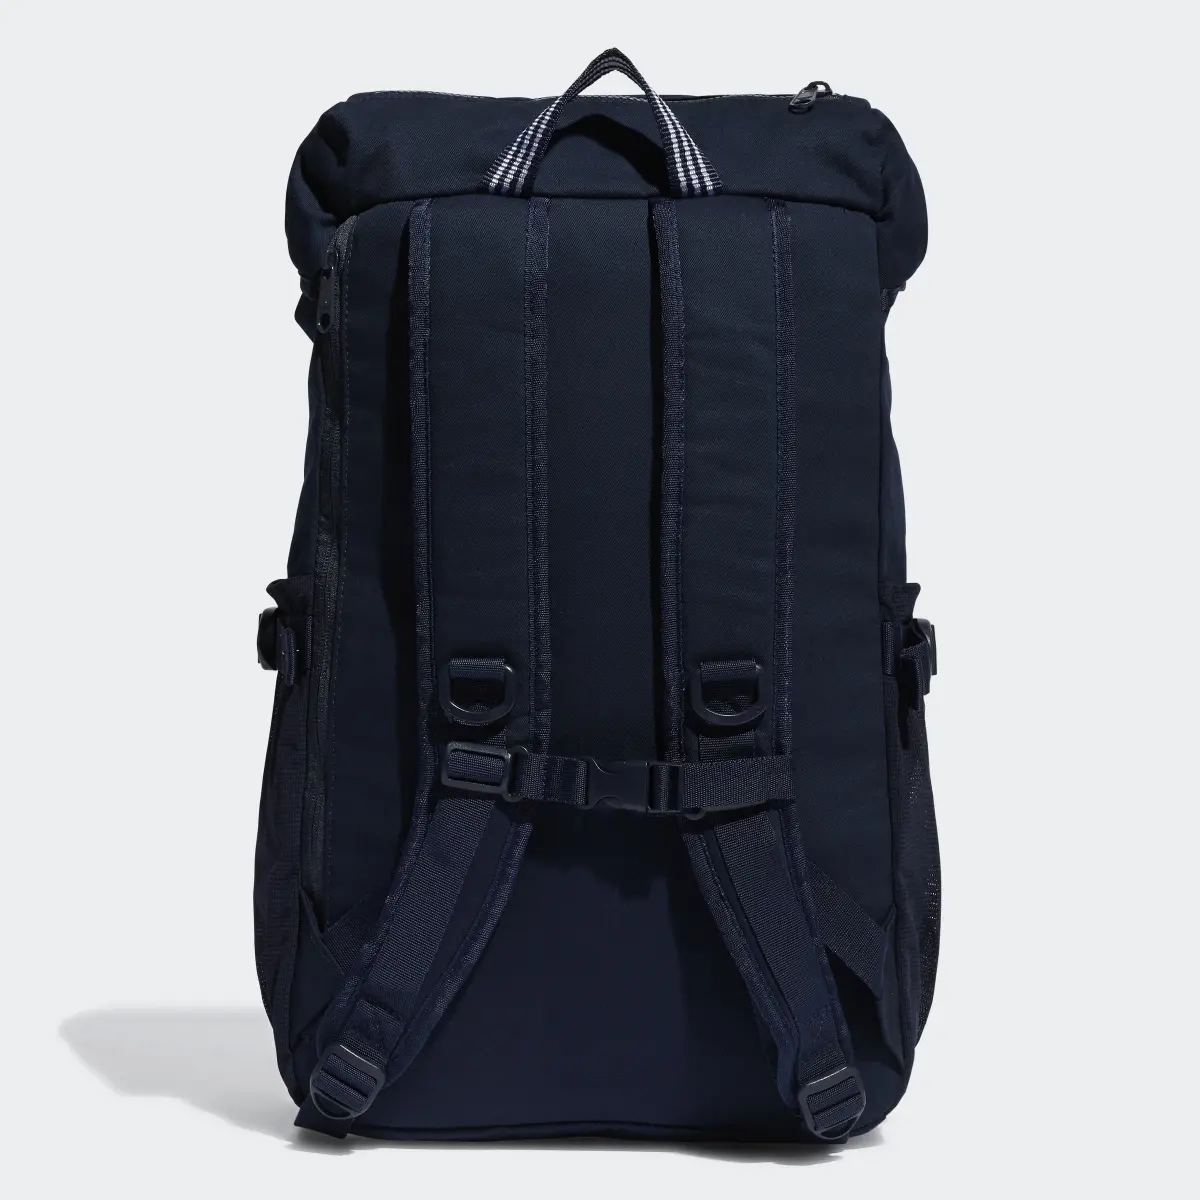 Adidas RIFTA Toploader Backpack. 3